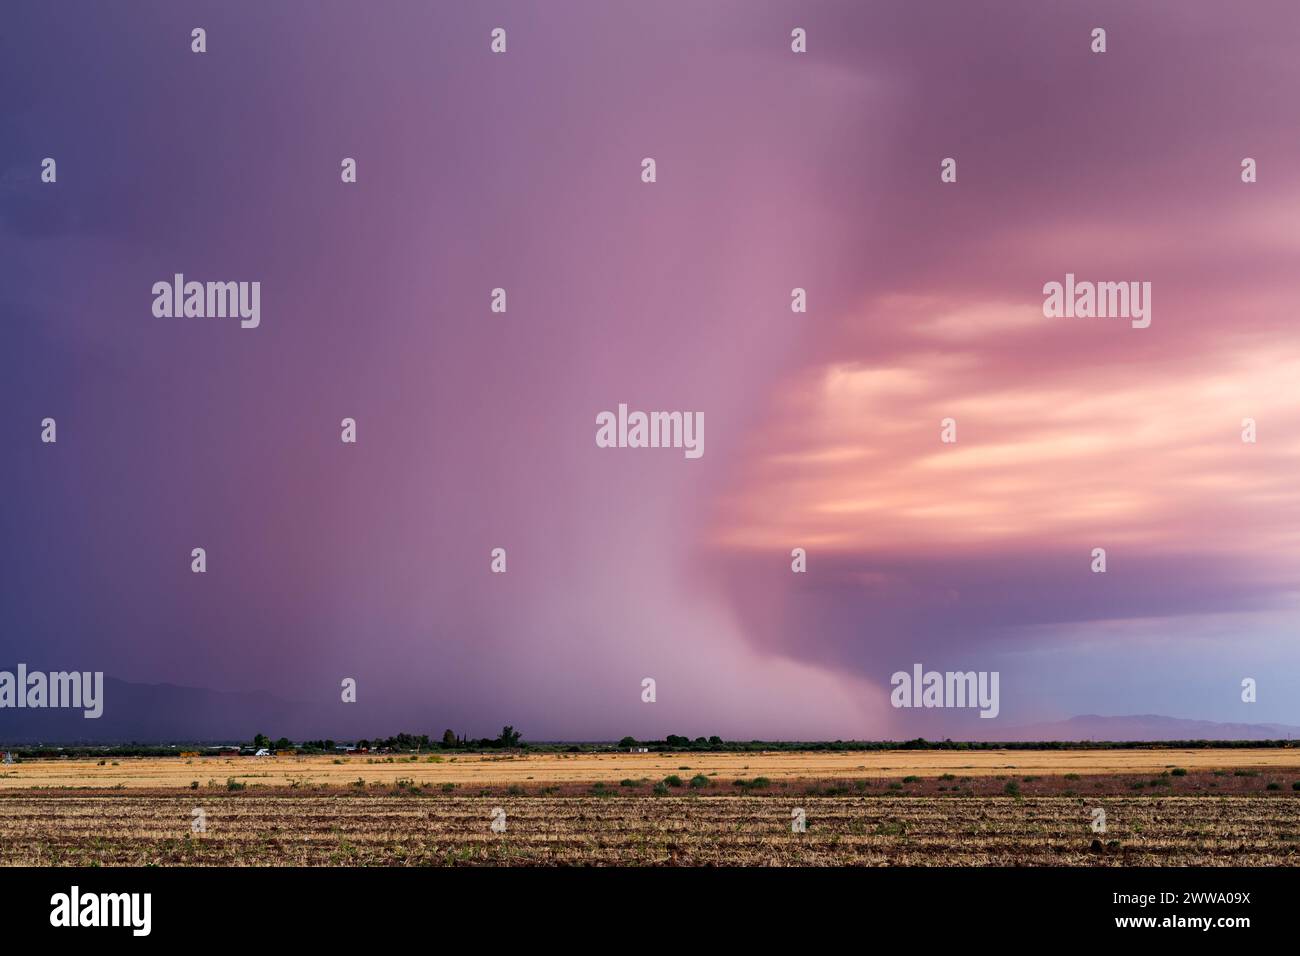 Microburst with heavy rain falling from a storm in the desert near Tucson, Arizona Stock Photo